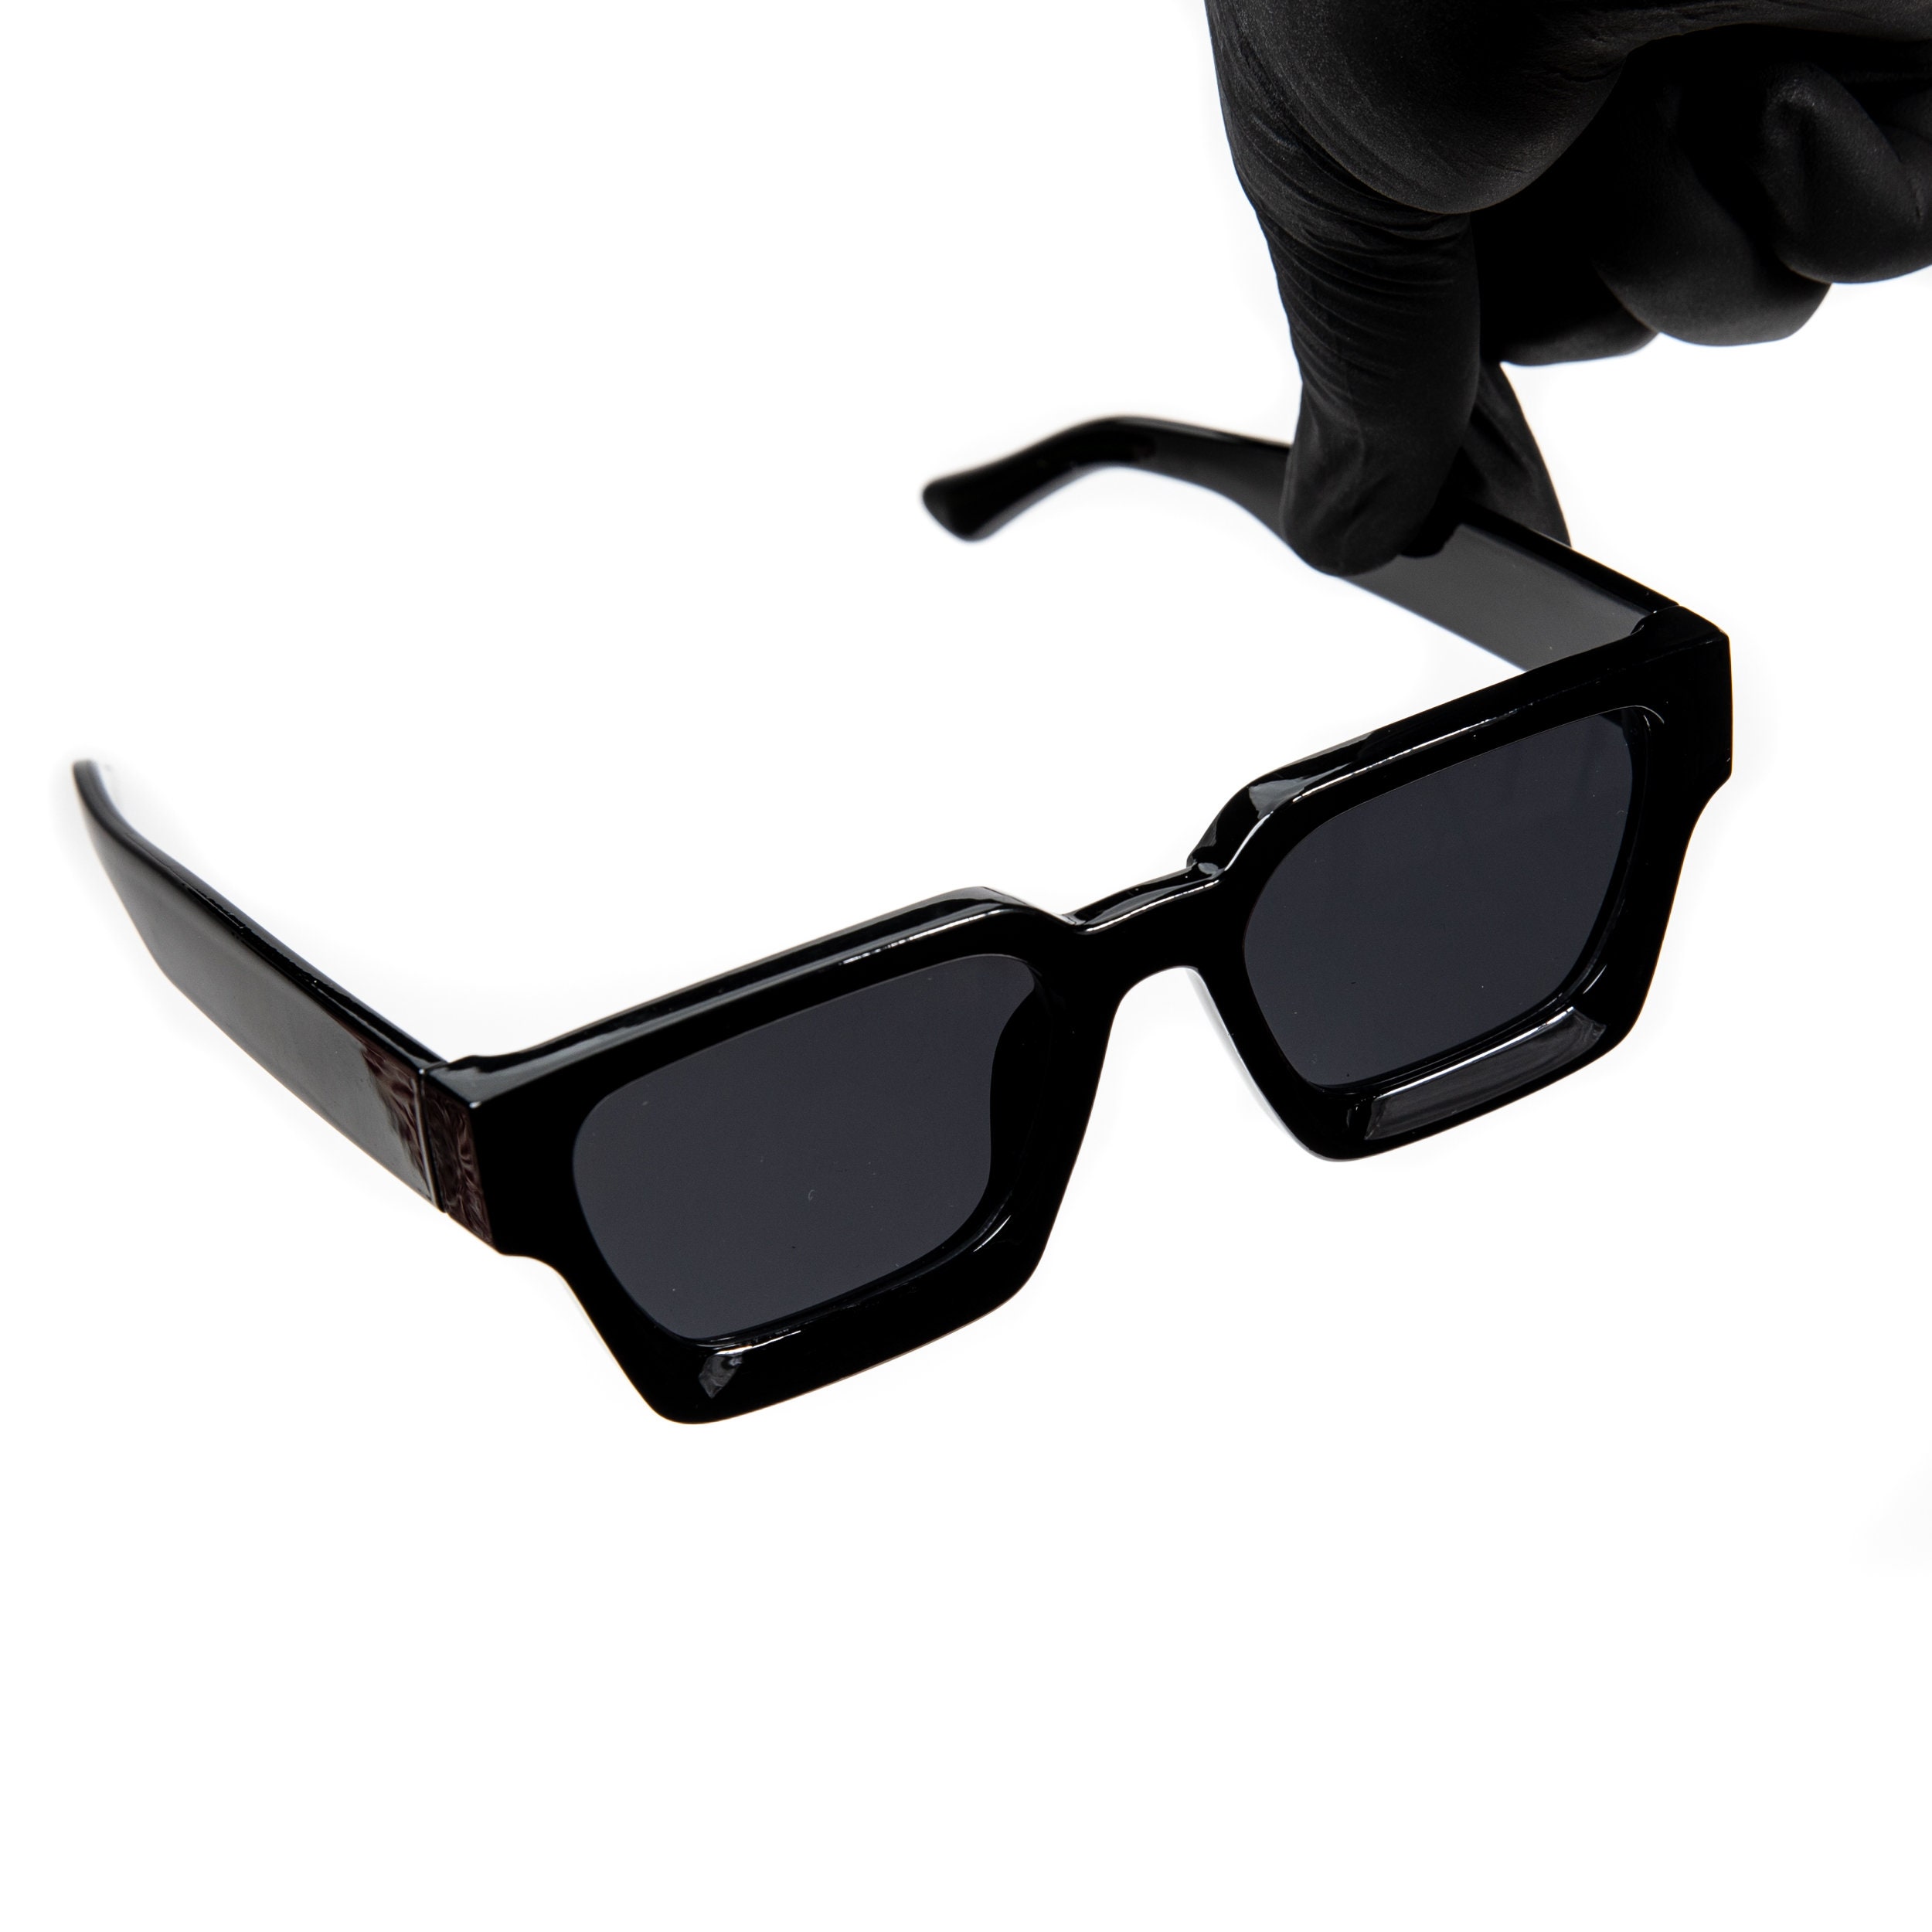 Louis Vuitton - Authenticated Millionaire Sunglasses - Plastic Black For Man, Very Good condition